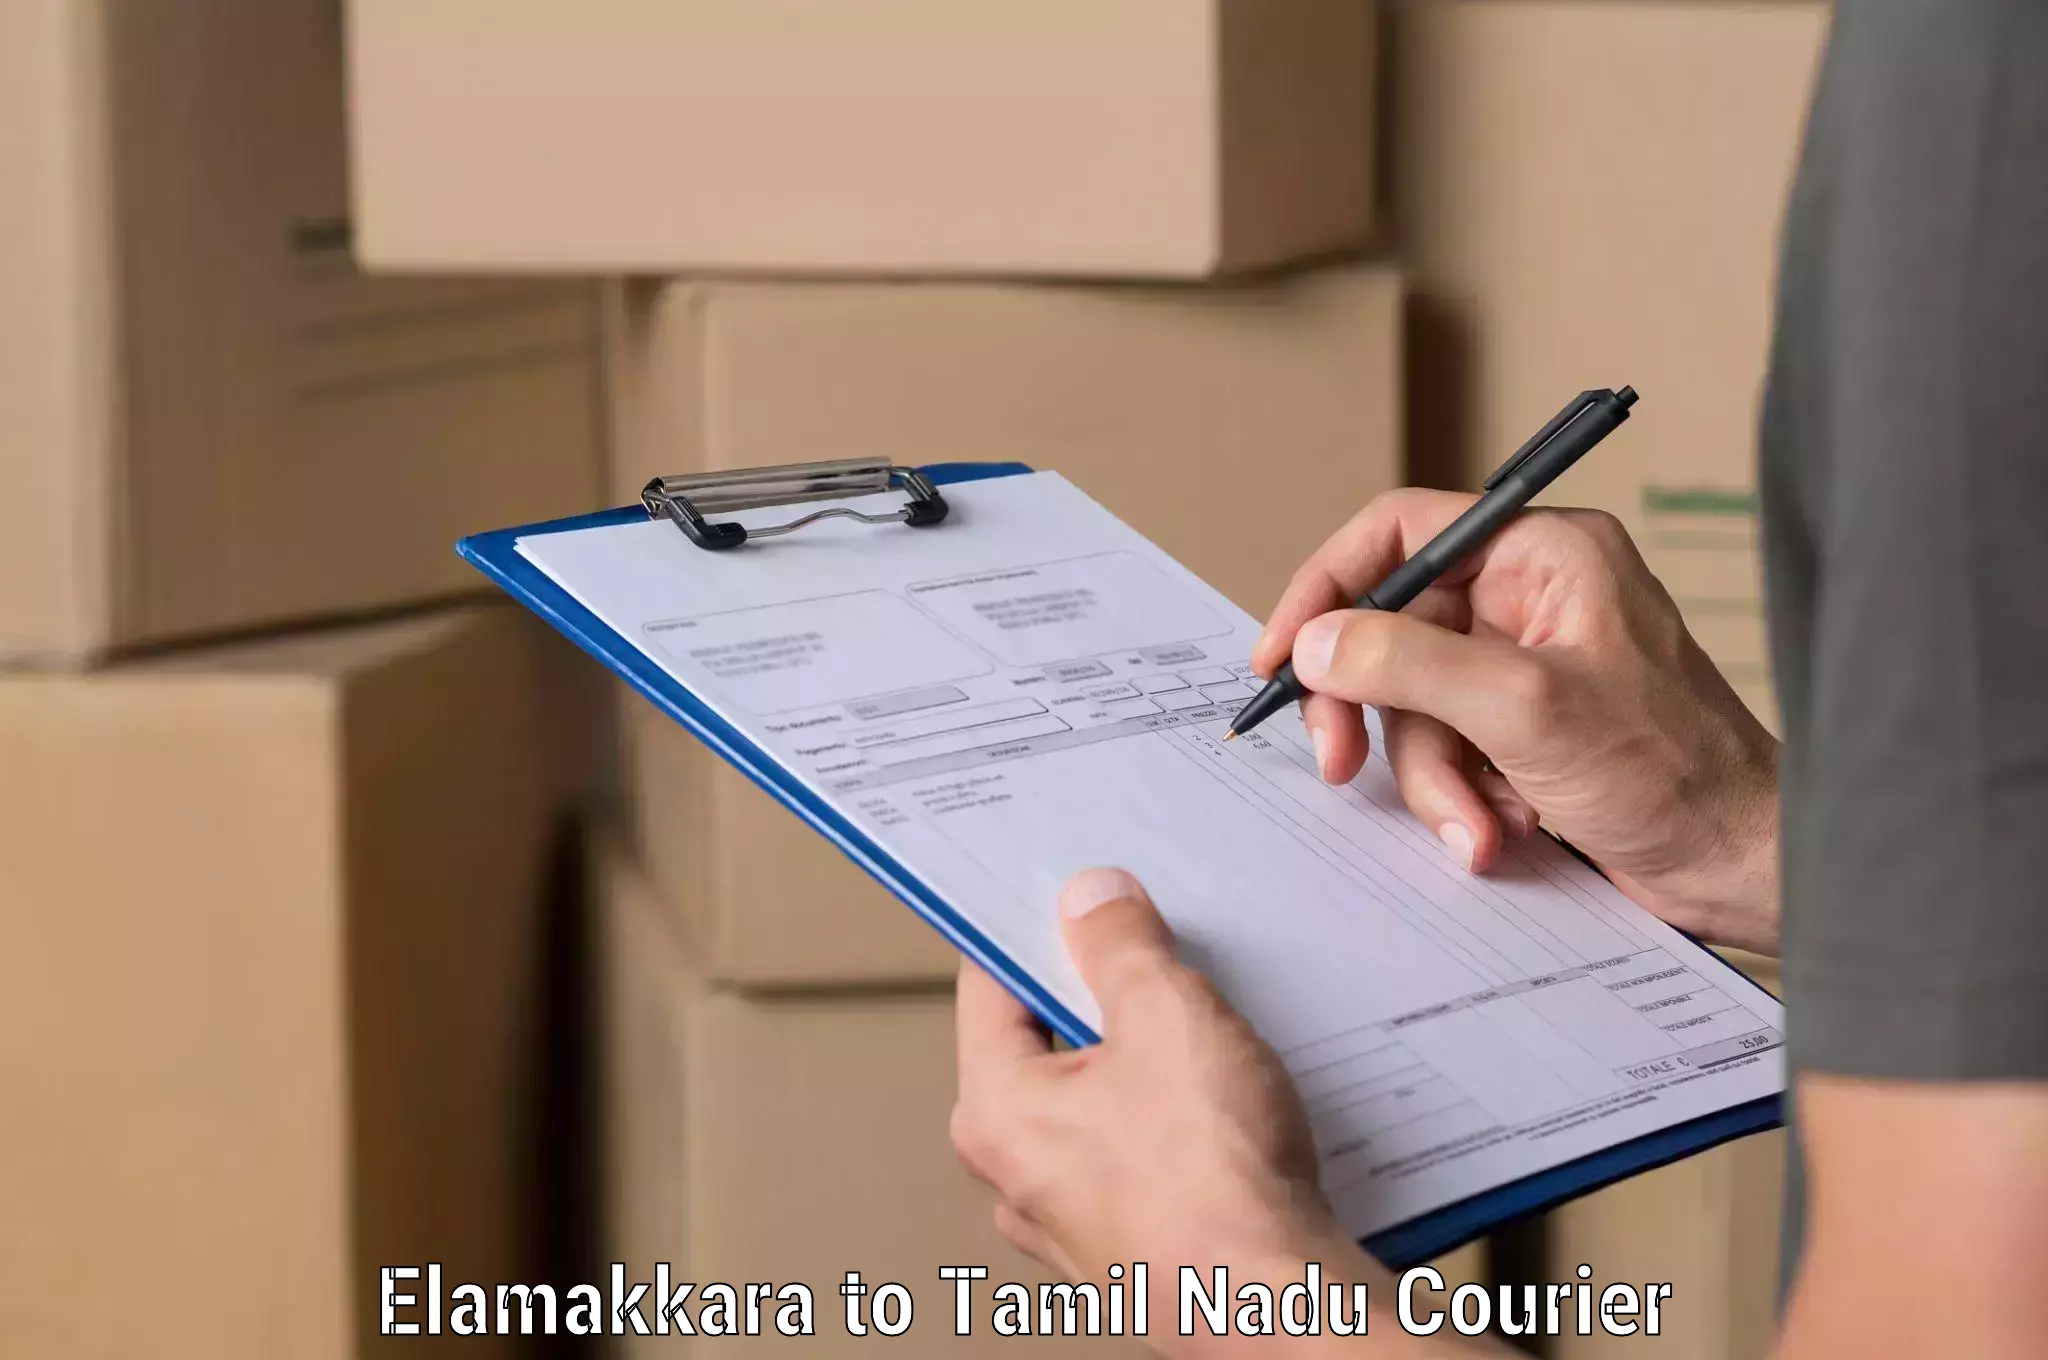 Global courier networks Elamakkara to Chennai Port